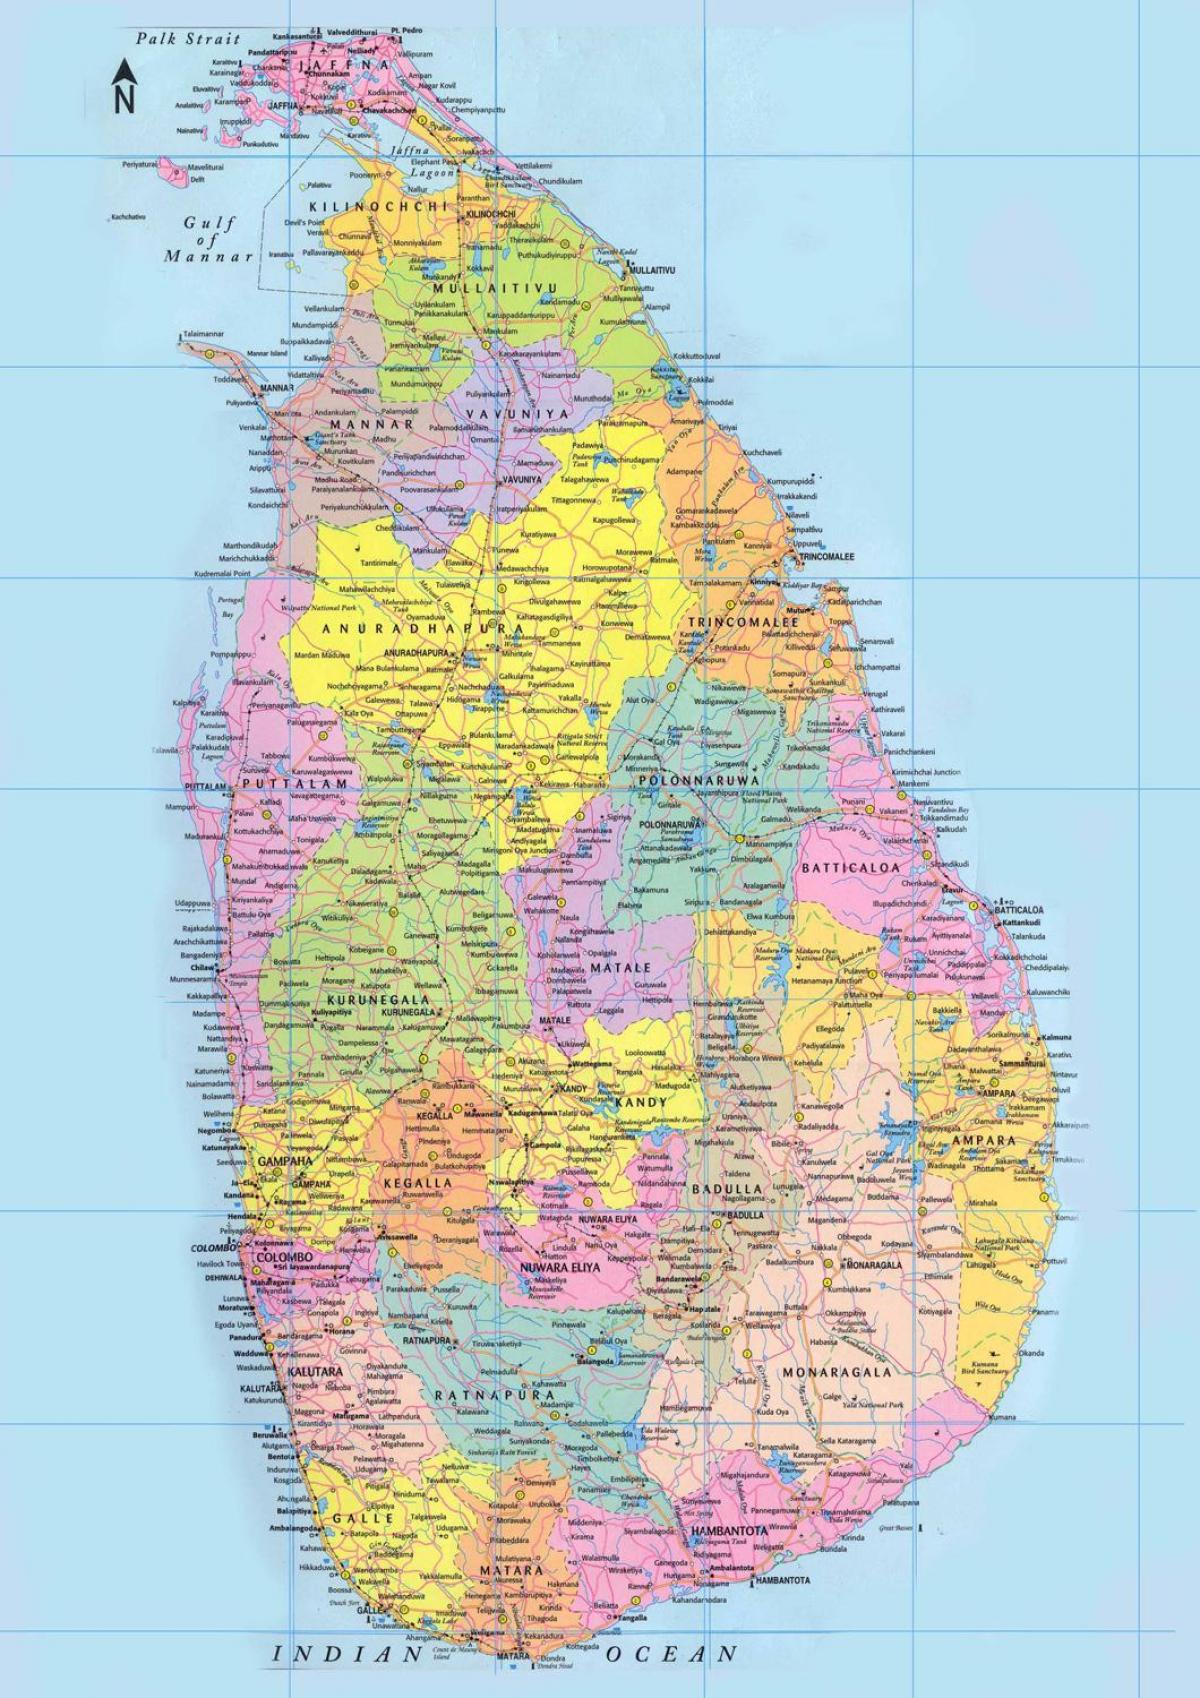 Sri Lanka road map distance km